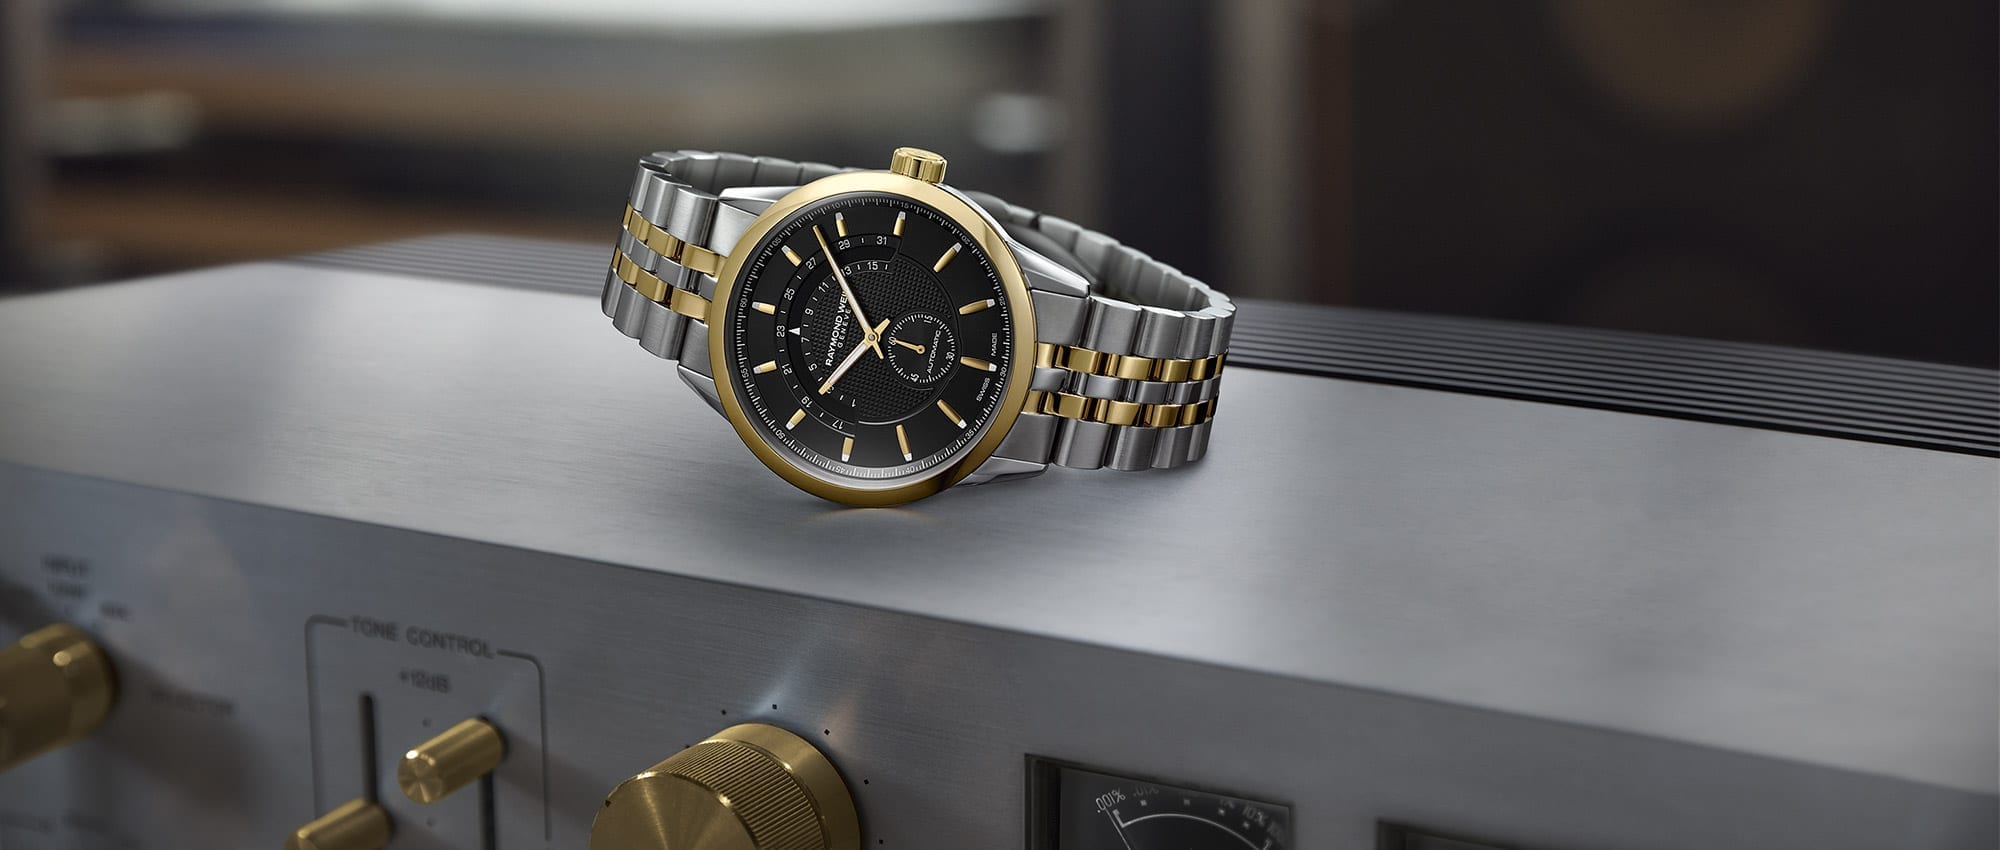 RAYMOND WEIL Men's Luxury Swiss Watch featuring the Freelancer Men's Half-moon Two-Tone Automatic Watch